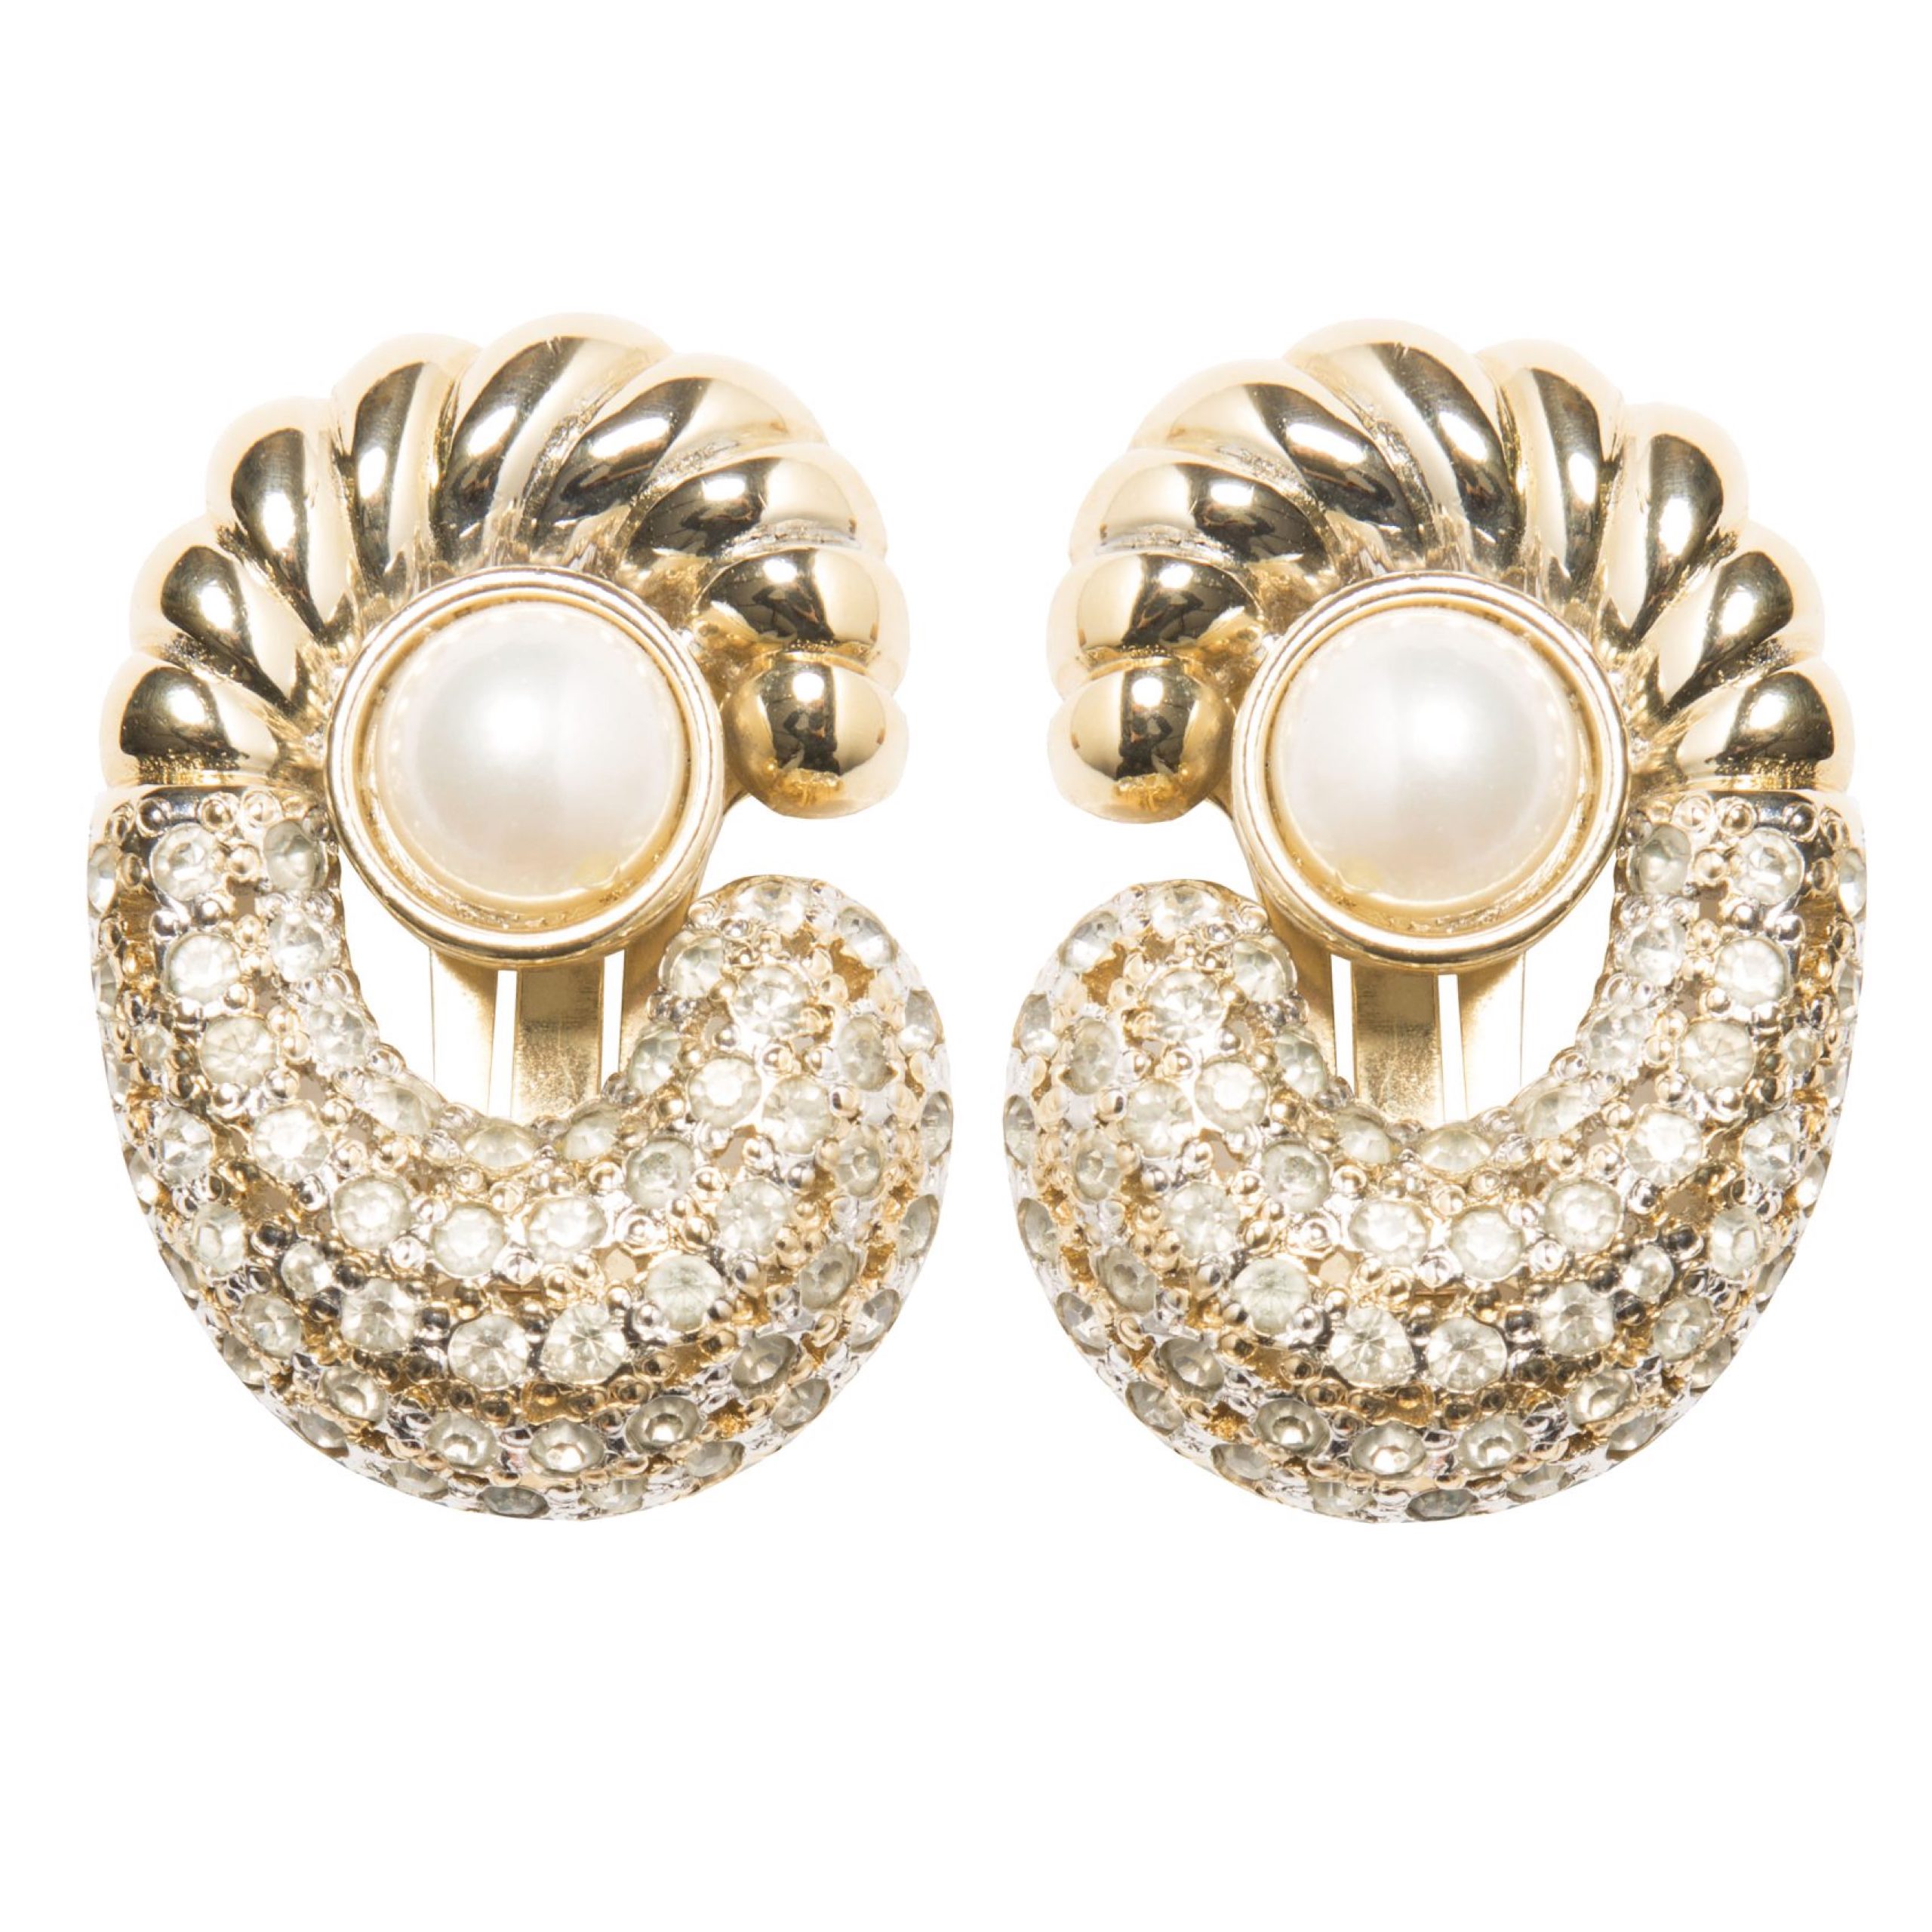 Vintage haute couture pearl centre earrings